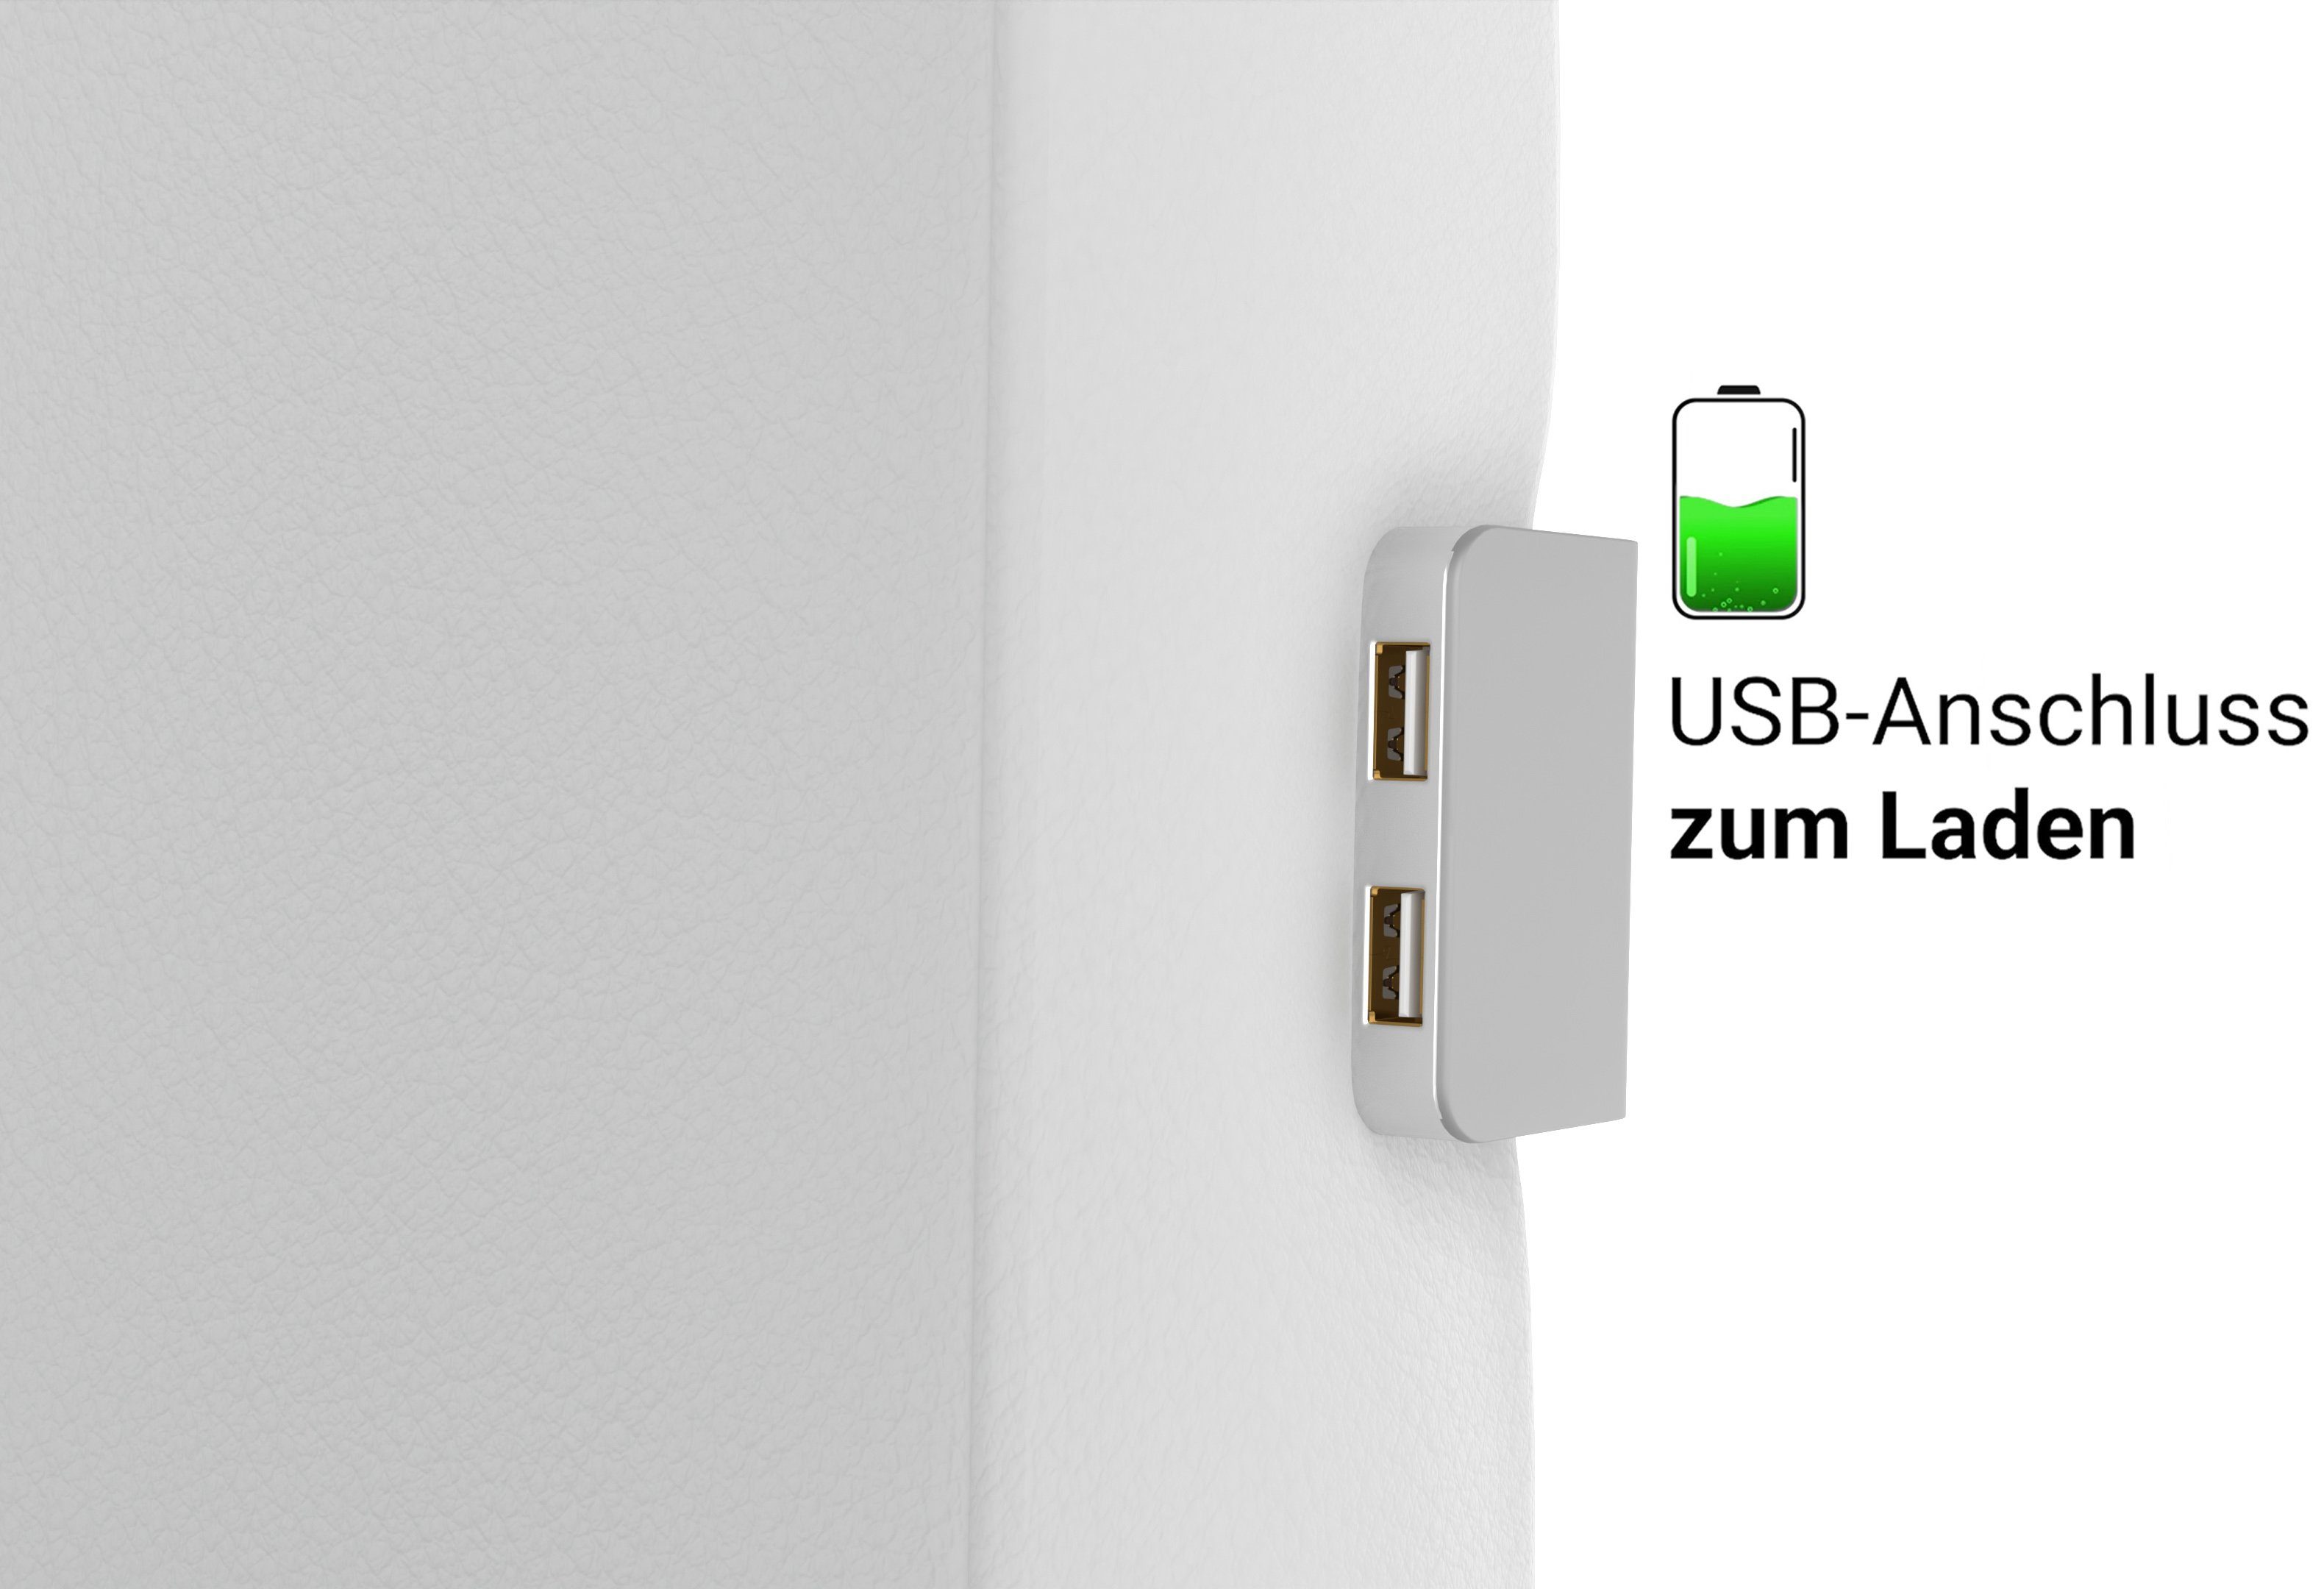 2x LED-Beleuchtung, und Boxspringbett Monza, USB-Anschluss Bettkasten, Topper inkl. wonello